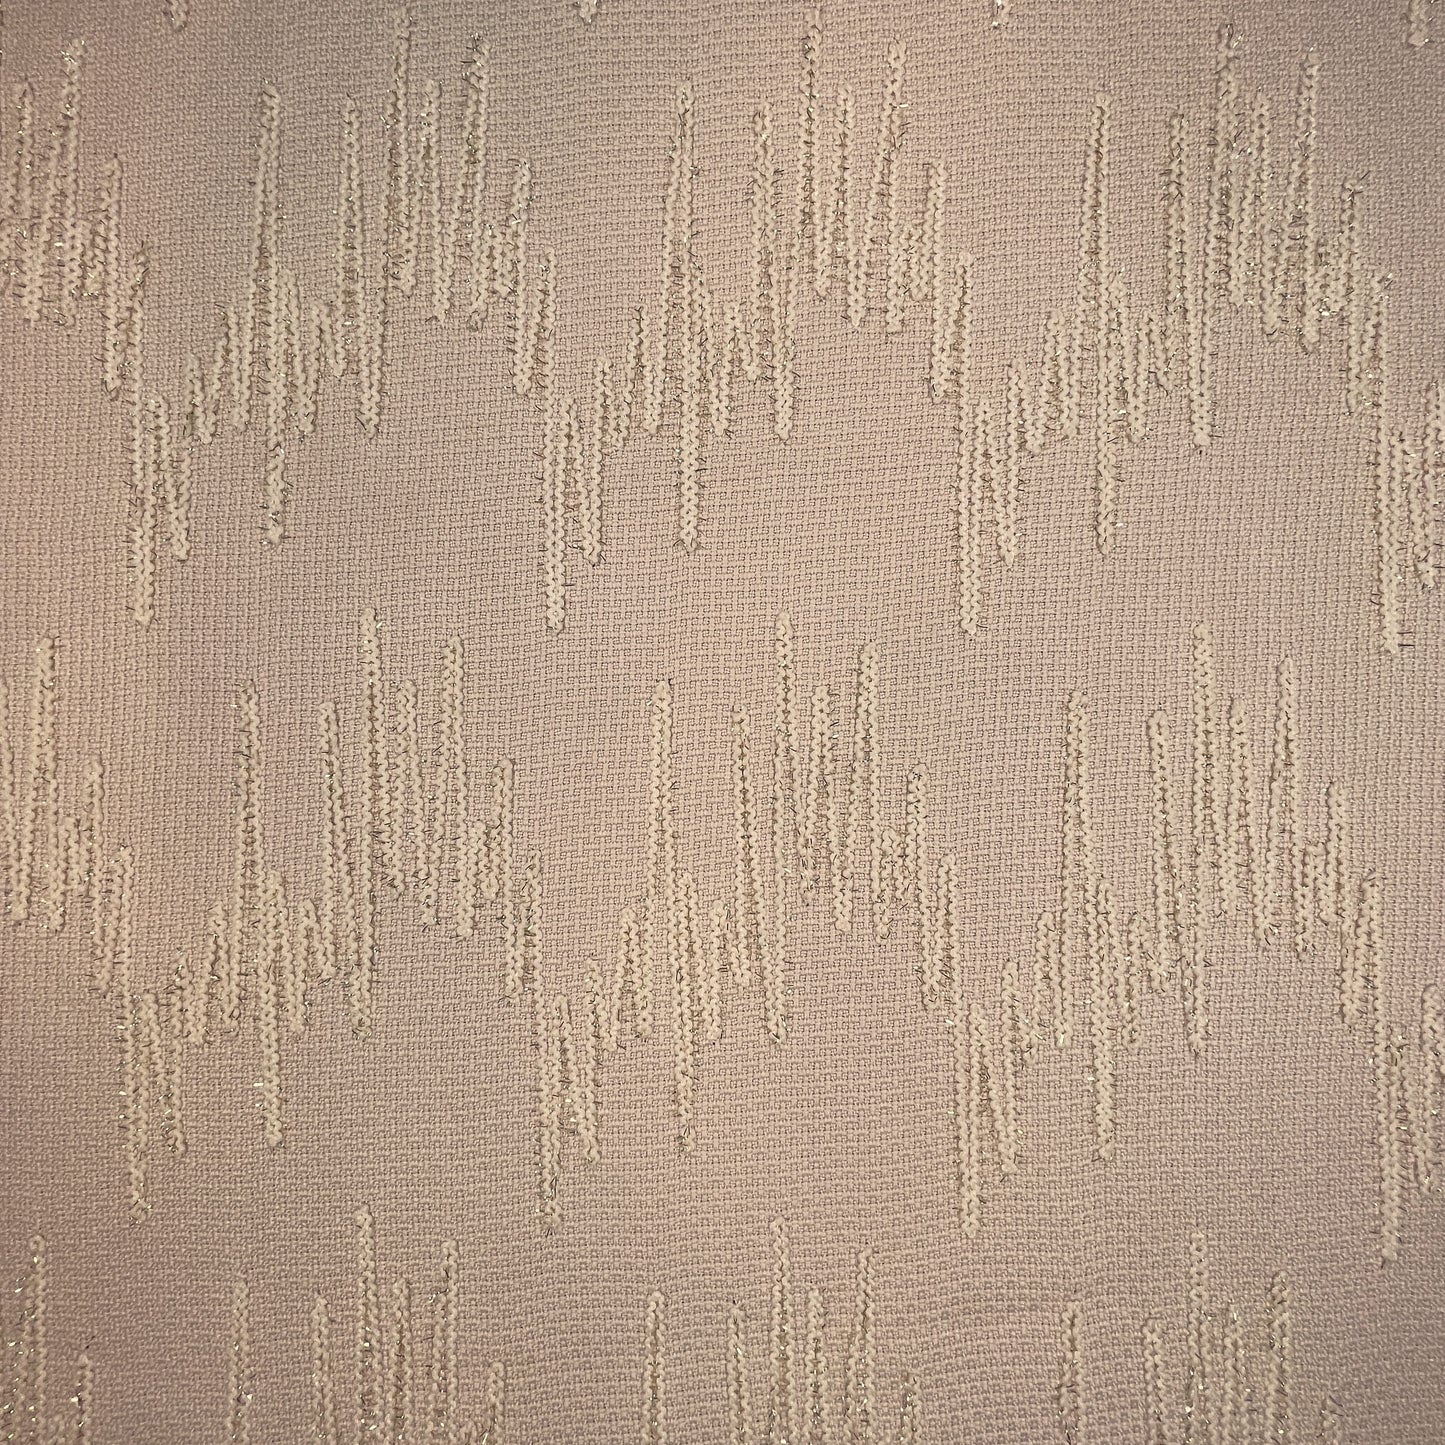 Premium Peach Pink Abstract Handloom Tweed Fabric